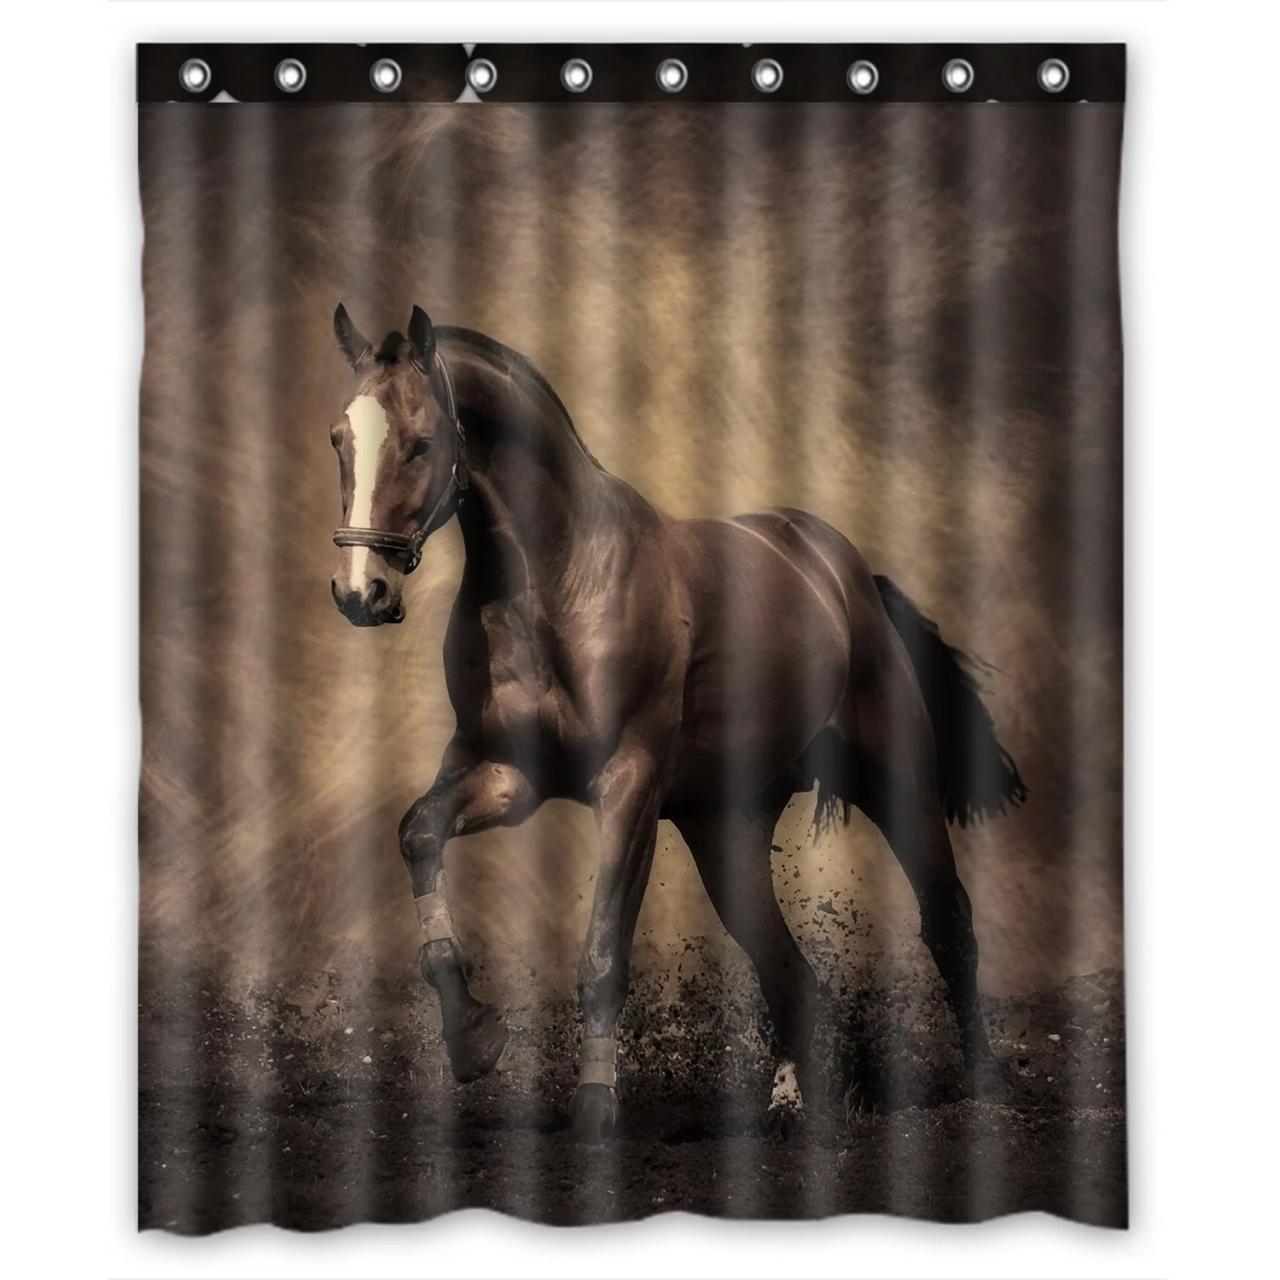 ZKGK Running Horse Waterproof Shower Curtain Bathroom Decor Sets with